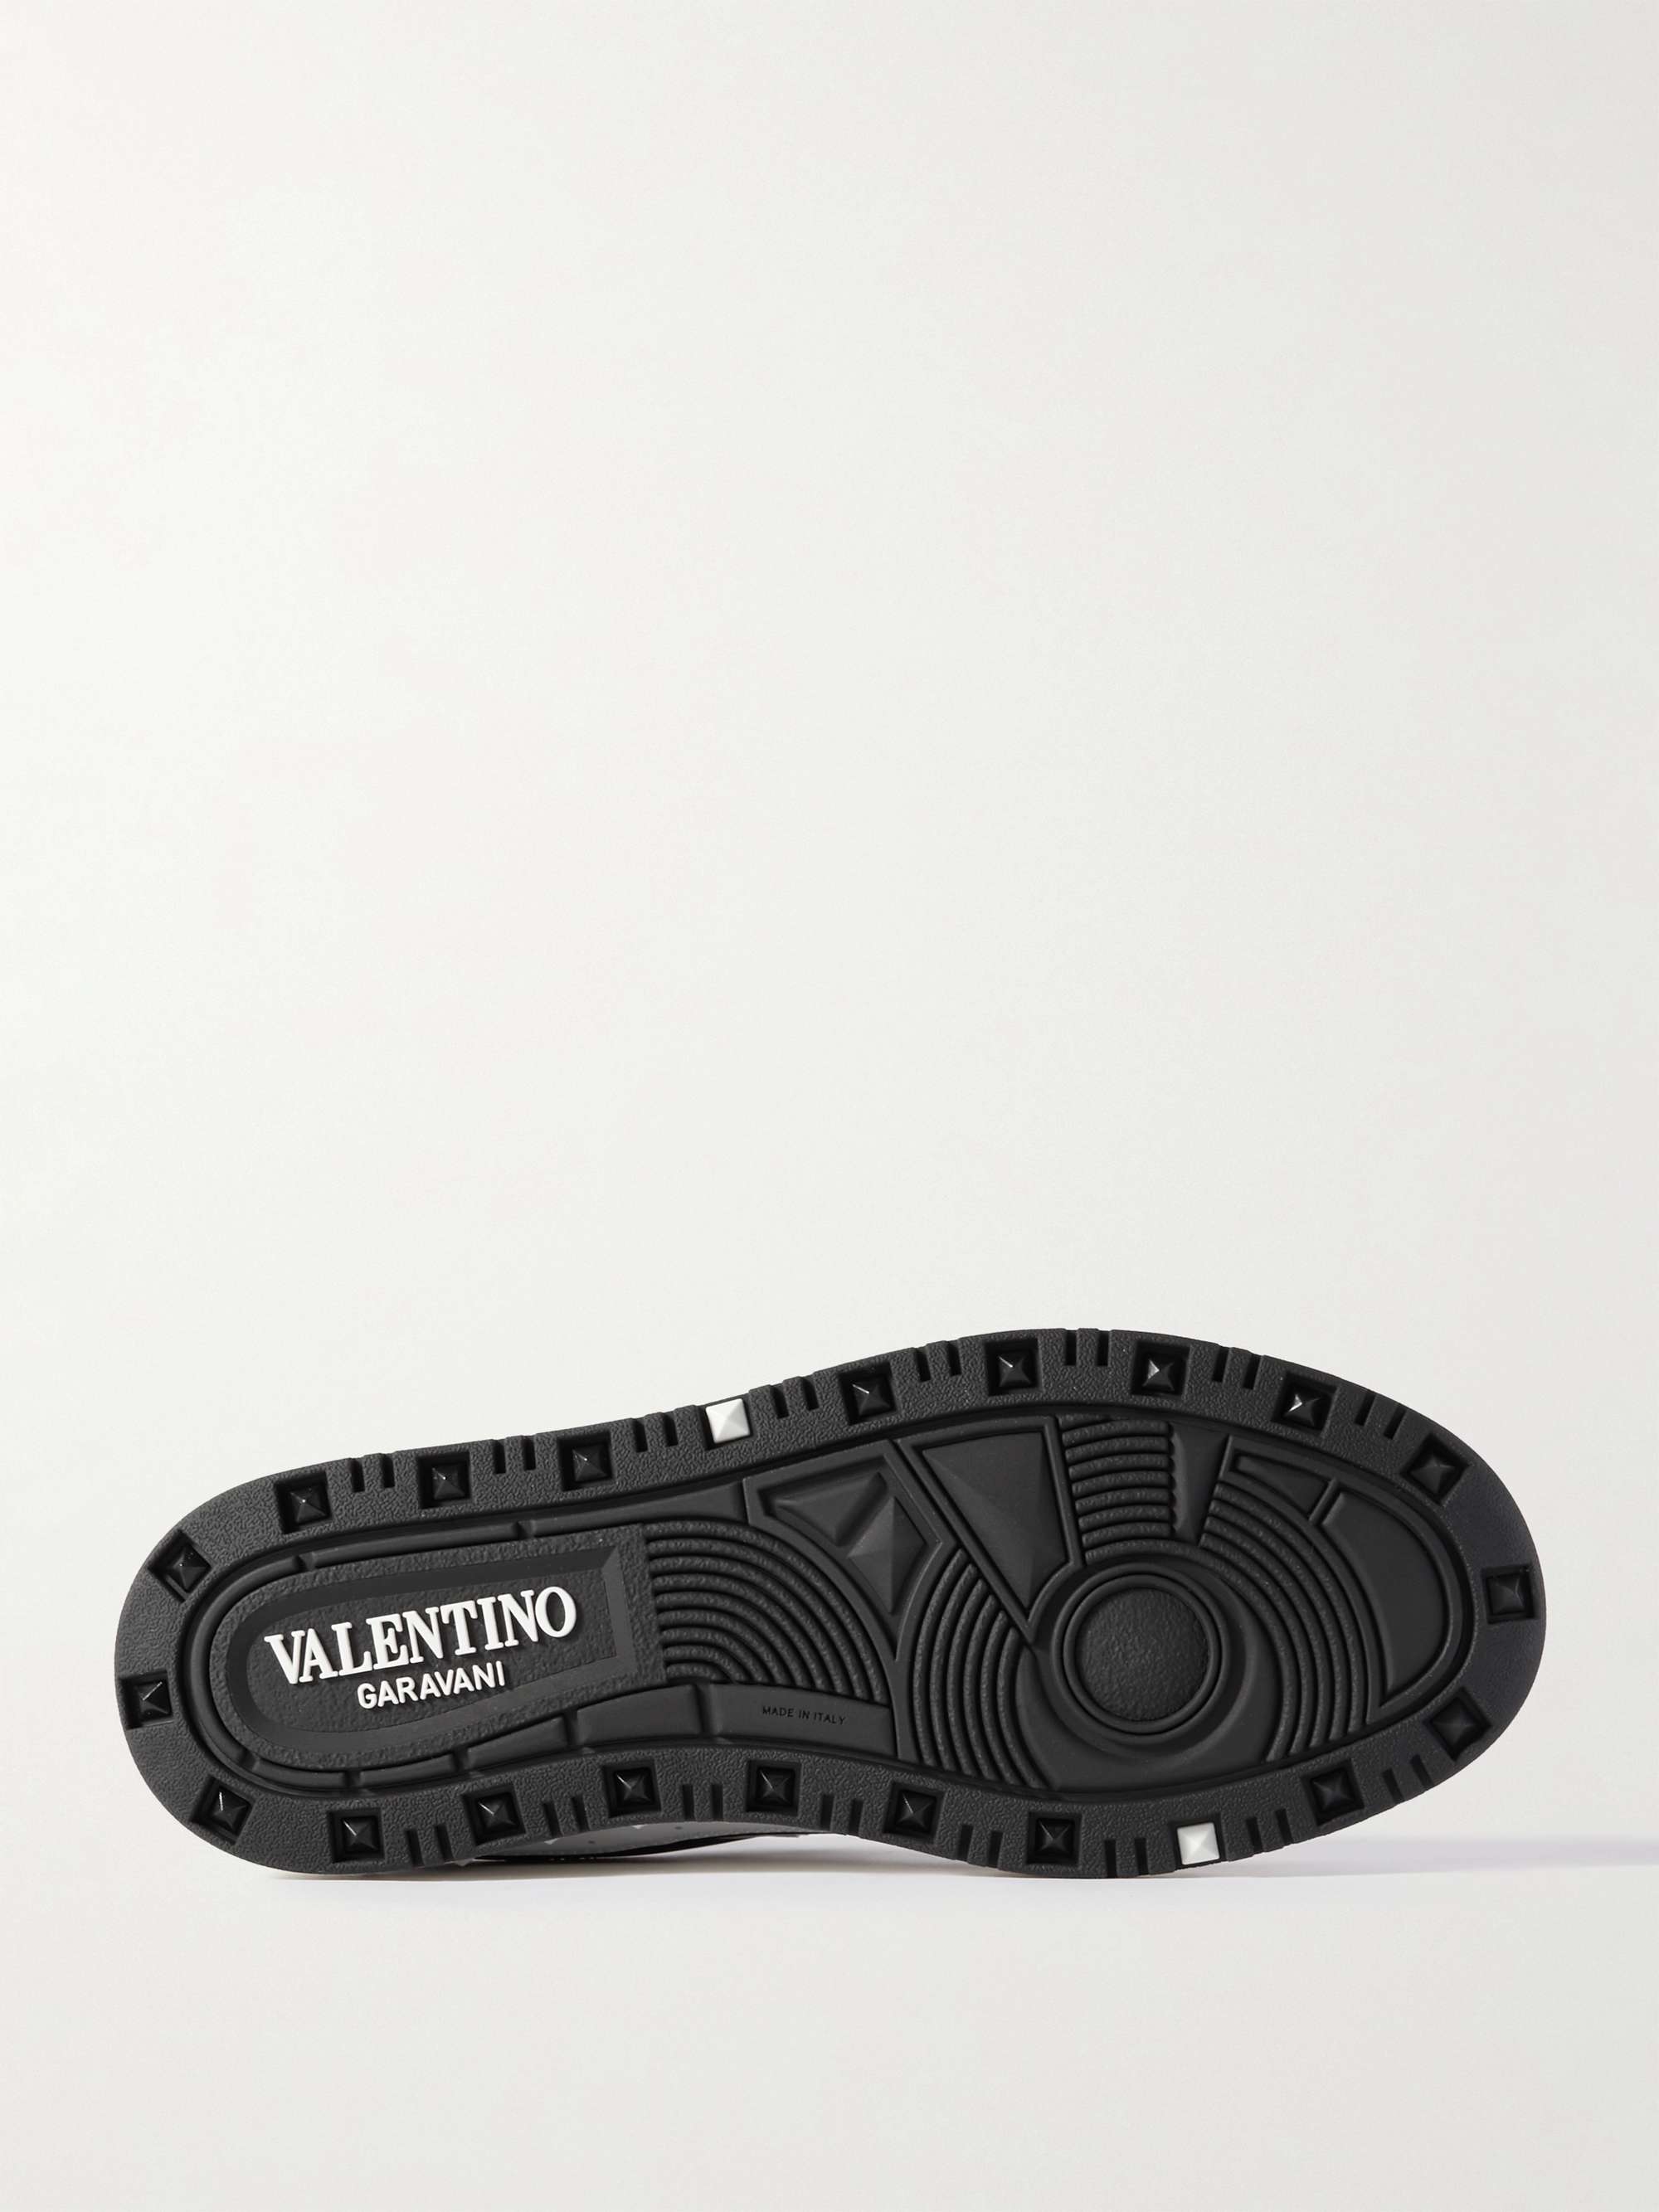 VALENTINO GARAVANI Valentino Garavani Leather Sneakers for Men | MR PORTER